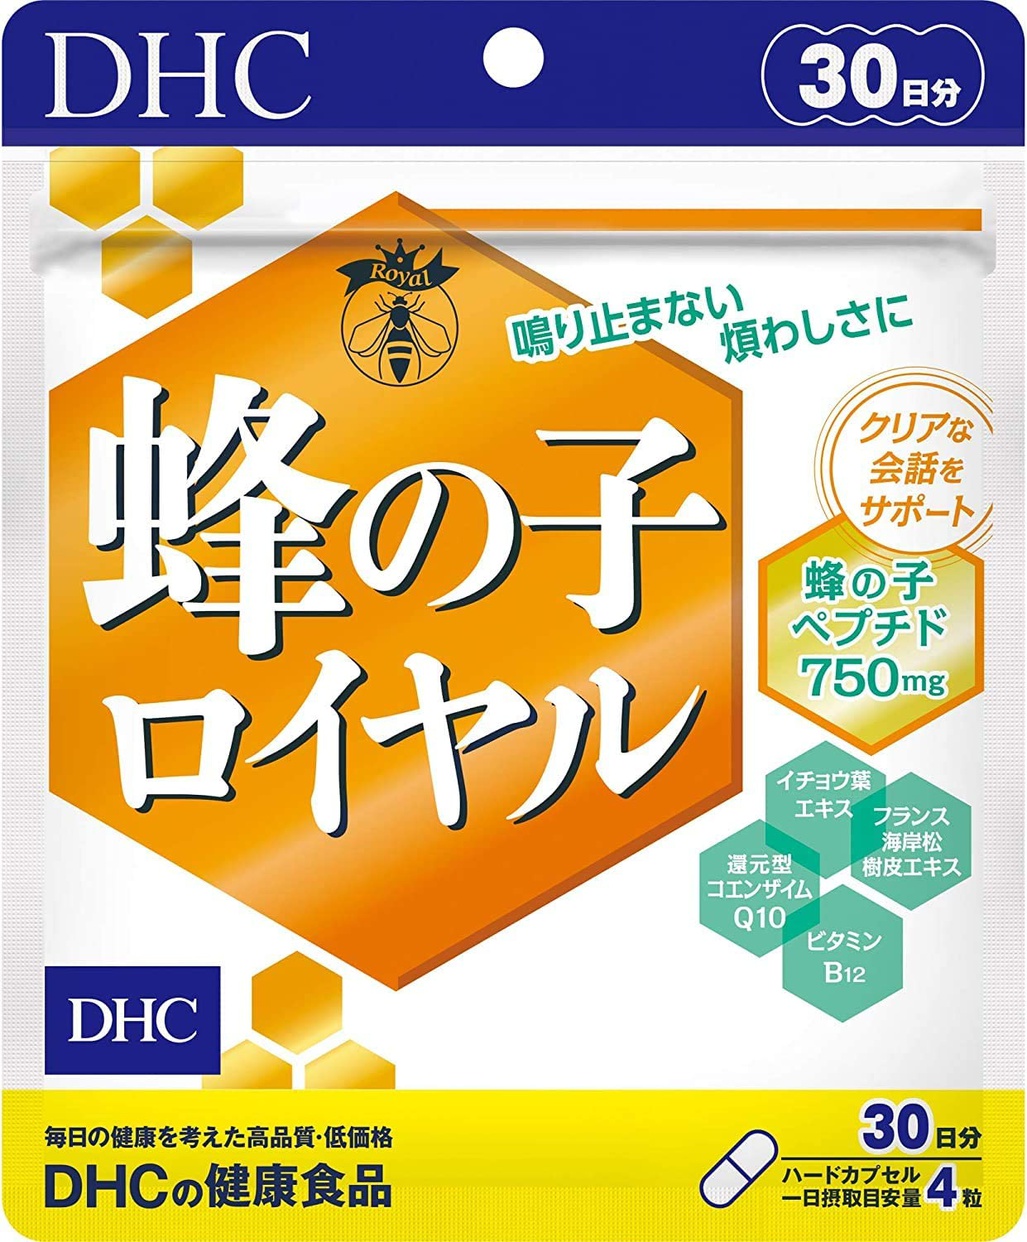 DHC(ディーエイチシー) 蜂の子ロイヤルの商品画像1 